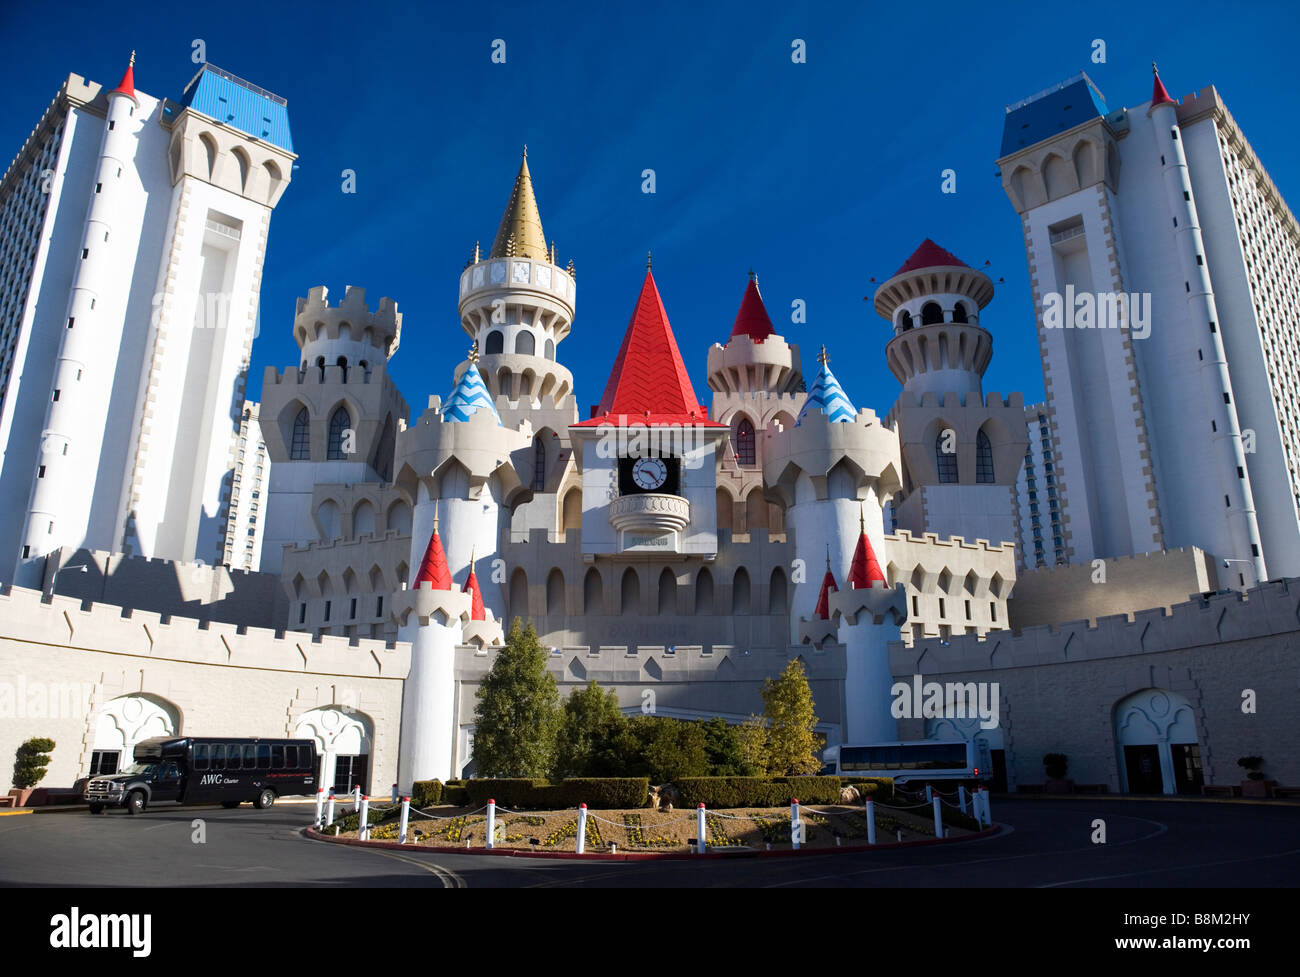 Excalibur Hotel and casino on the Las Vegas strip, Nevada, USA Stock Photo